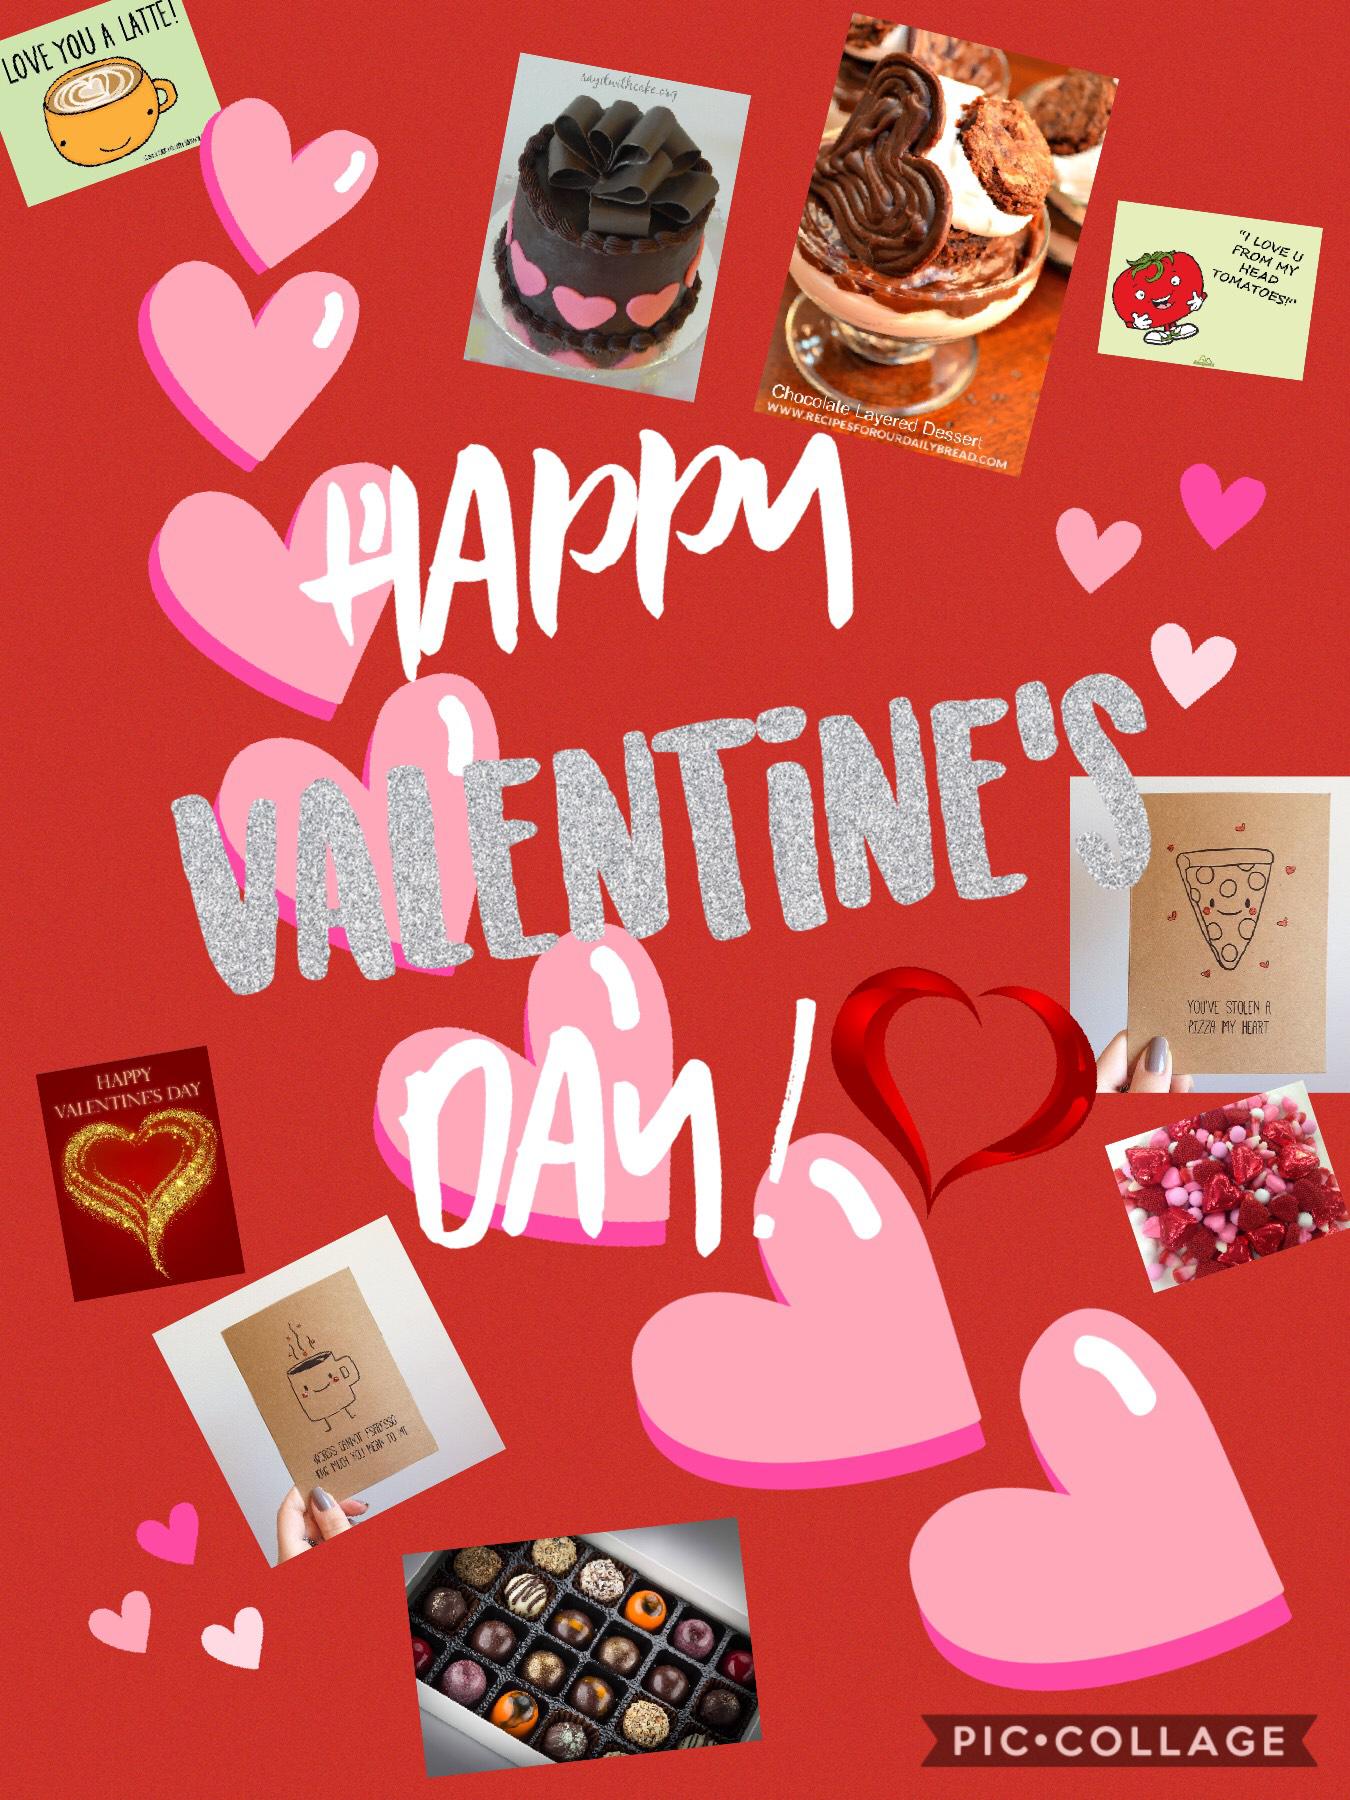 Happy (late) Valentine’s Day! 😁😆